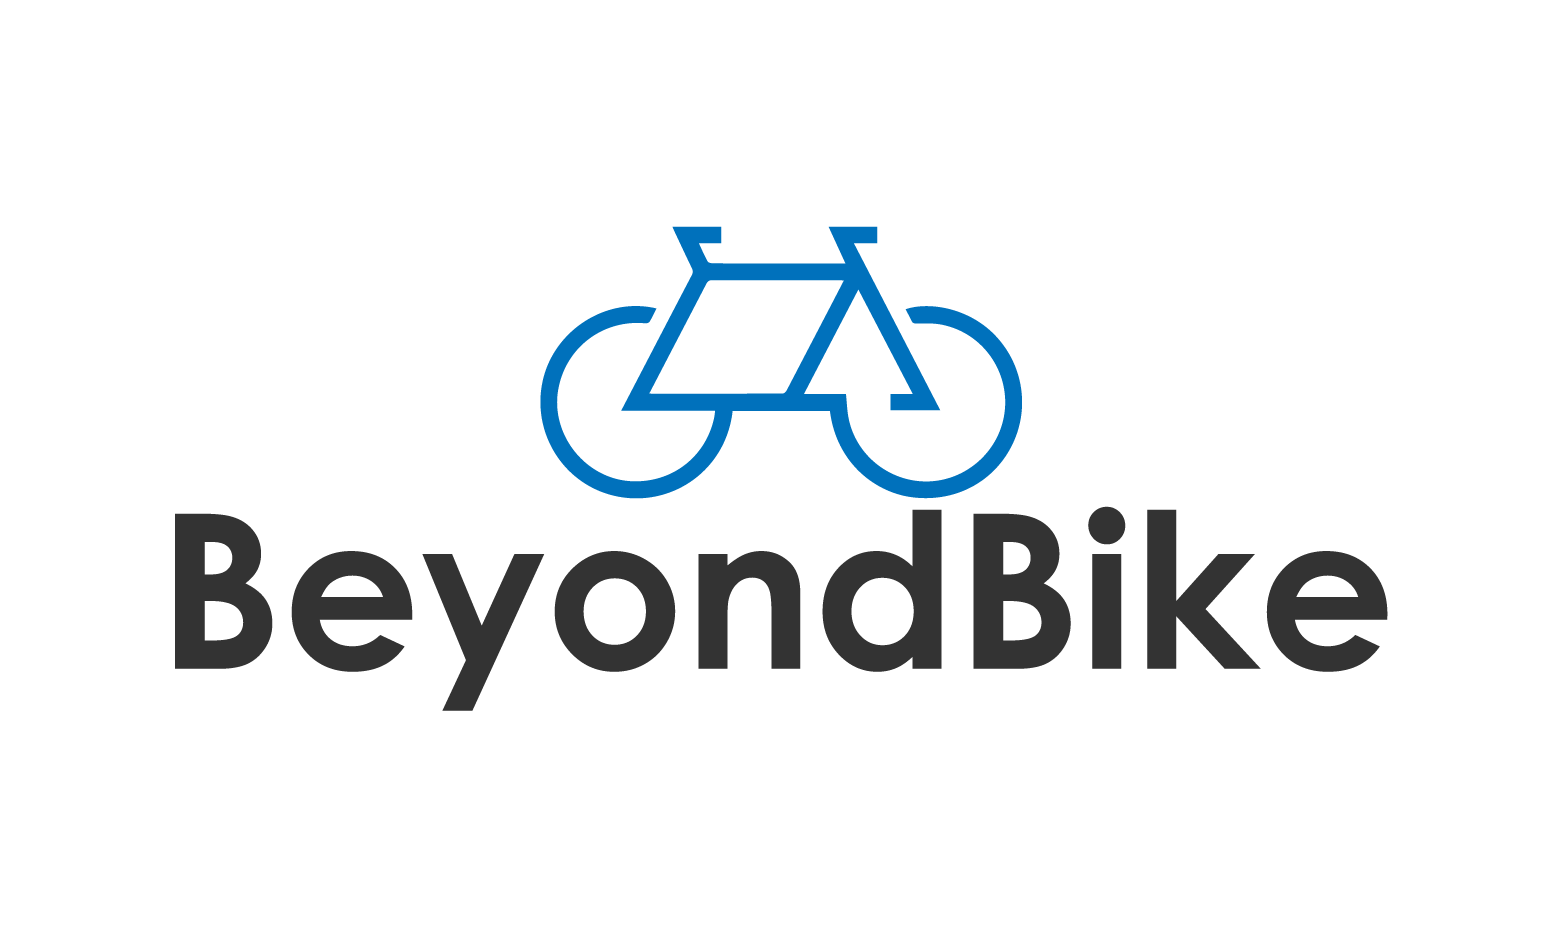 BeyondBike.com - Creative brandable domain for sale